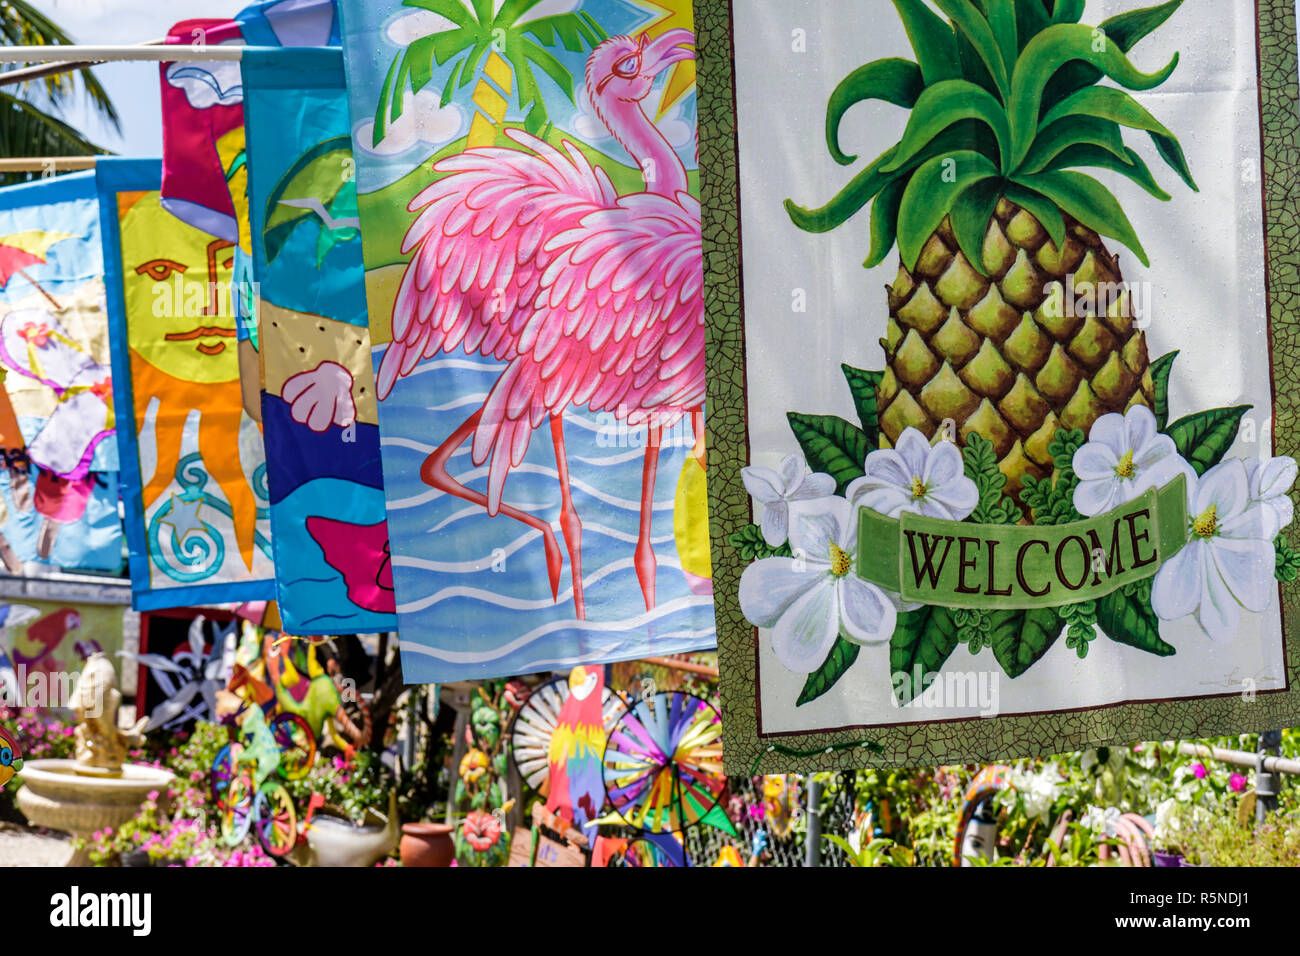 Florida Florida Keys,Tavernier,US highway Route 1,Overseas Highway,Plantation Key Nursery,garden decor,interior design,banner,flag,pineapple image,wel Stock Photo